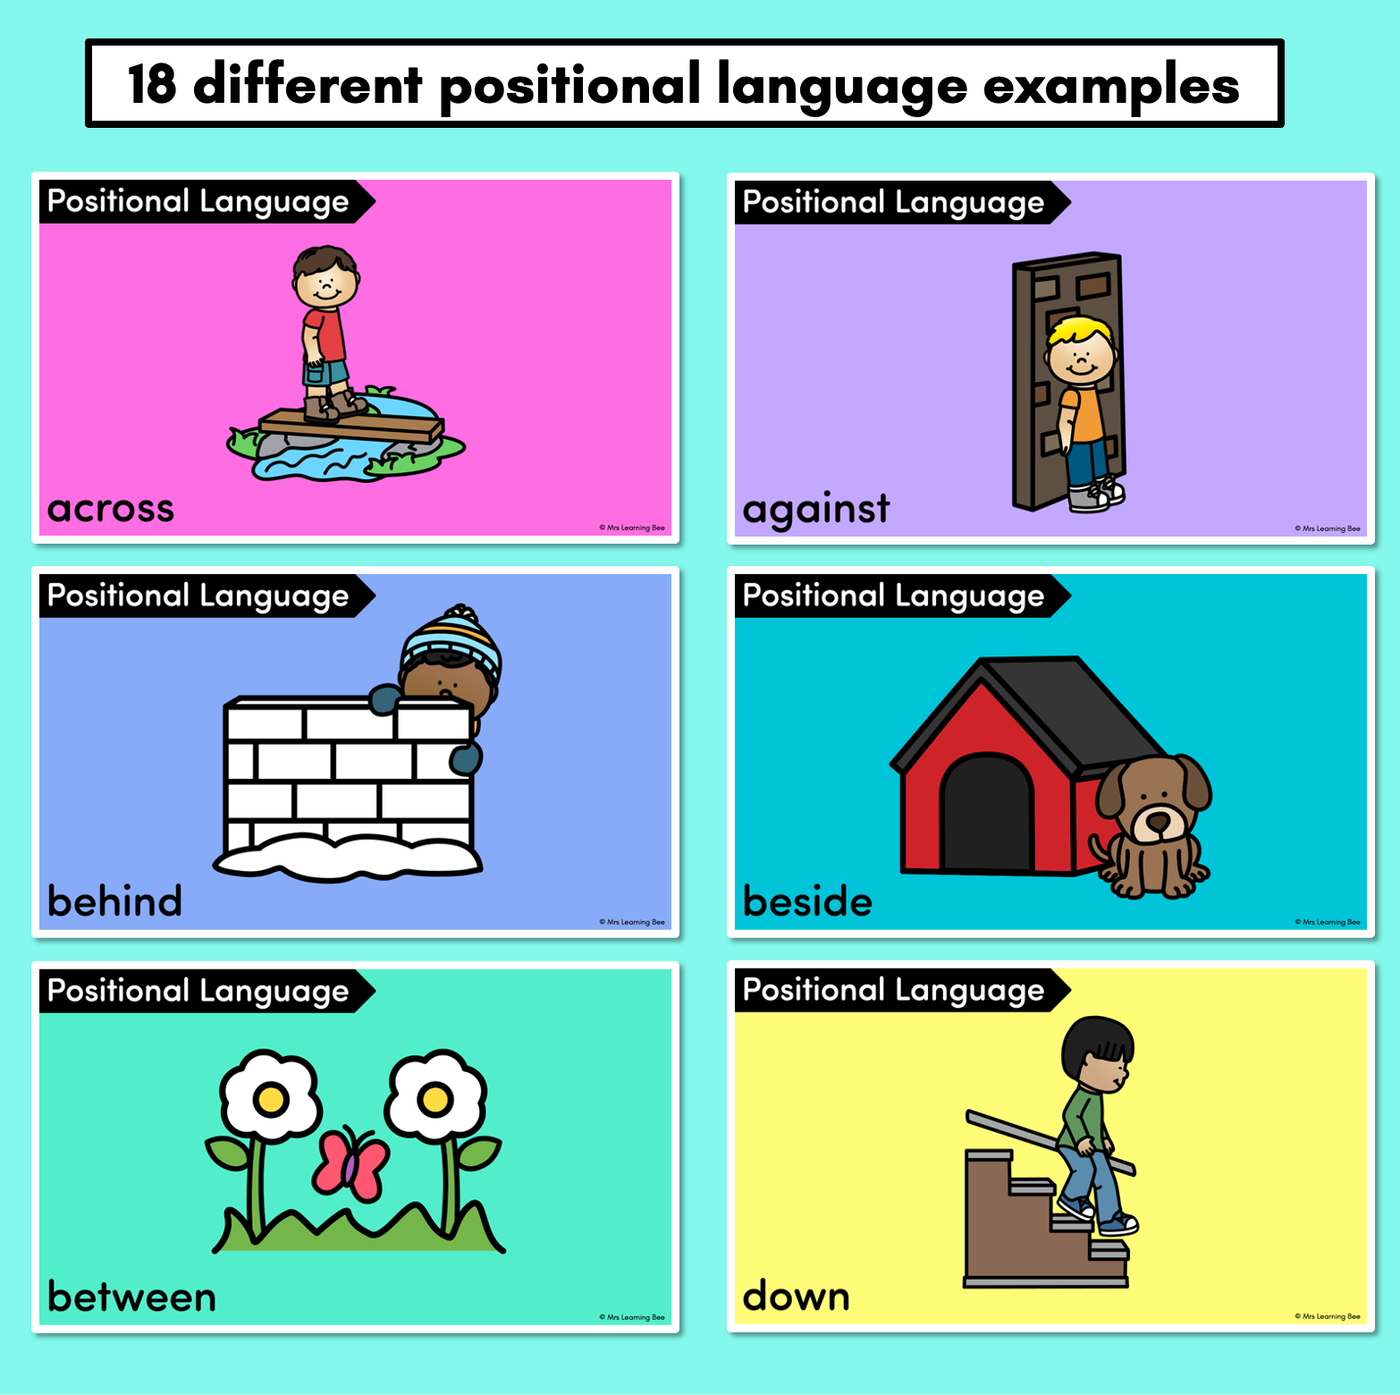 Positional Language Digital Slides - Position Words